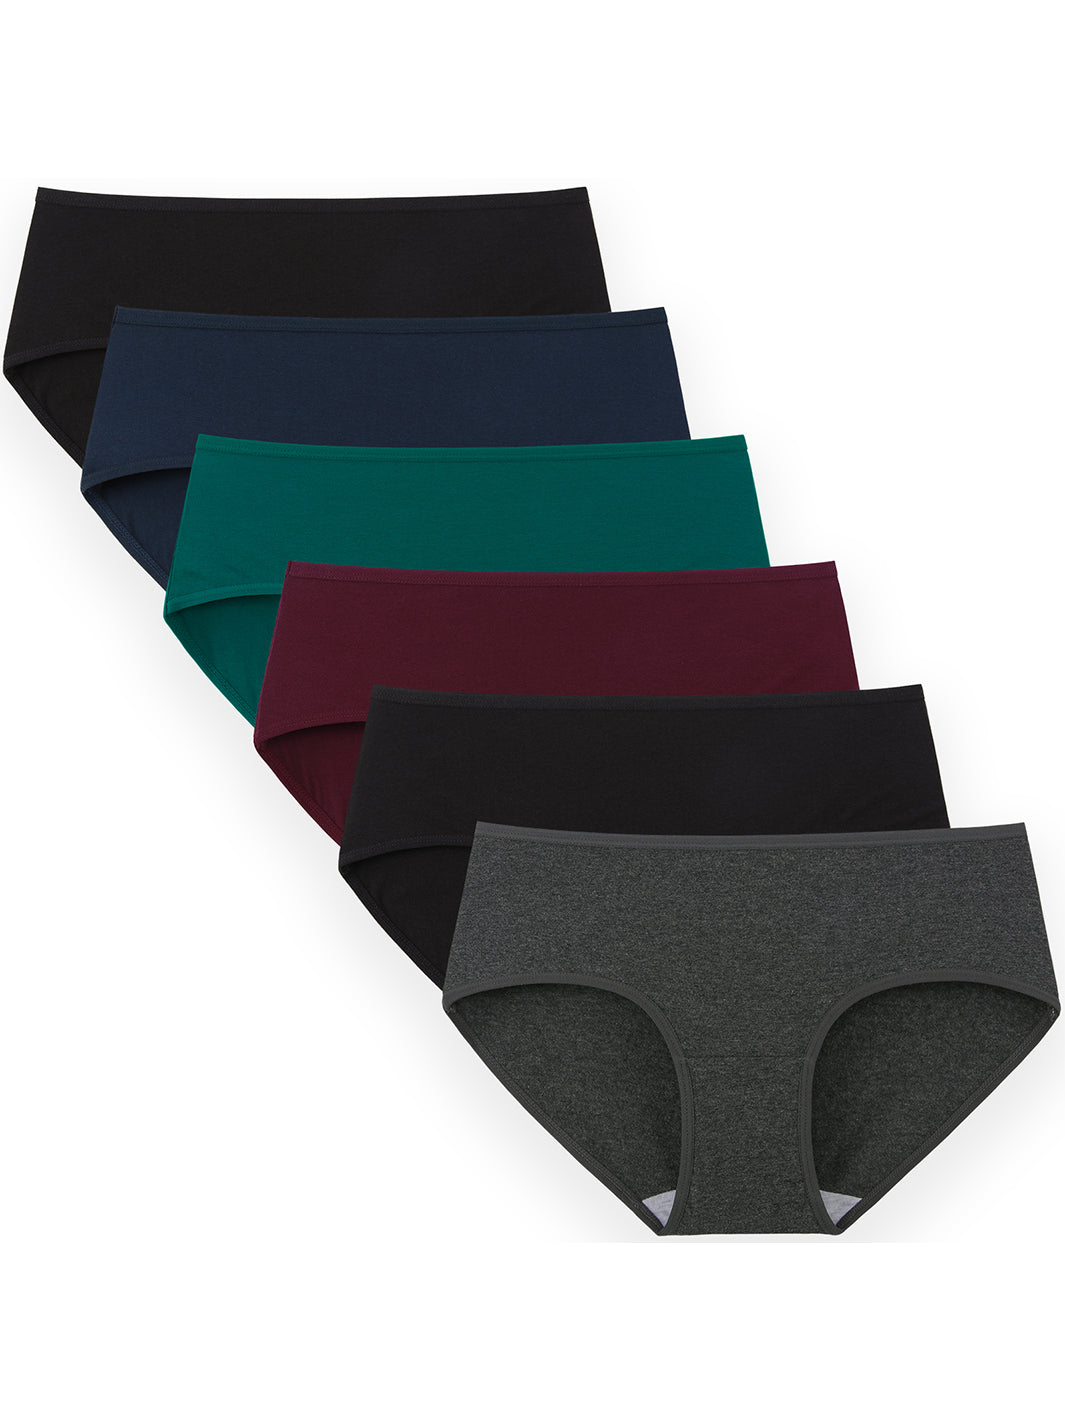 Buy SIDDHI MART Women Underwear/Hipster Panties for Women/Pack of